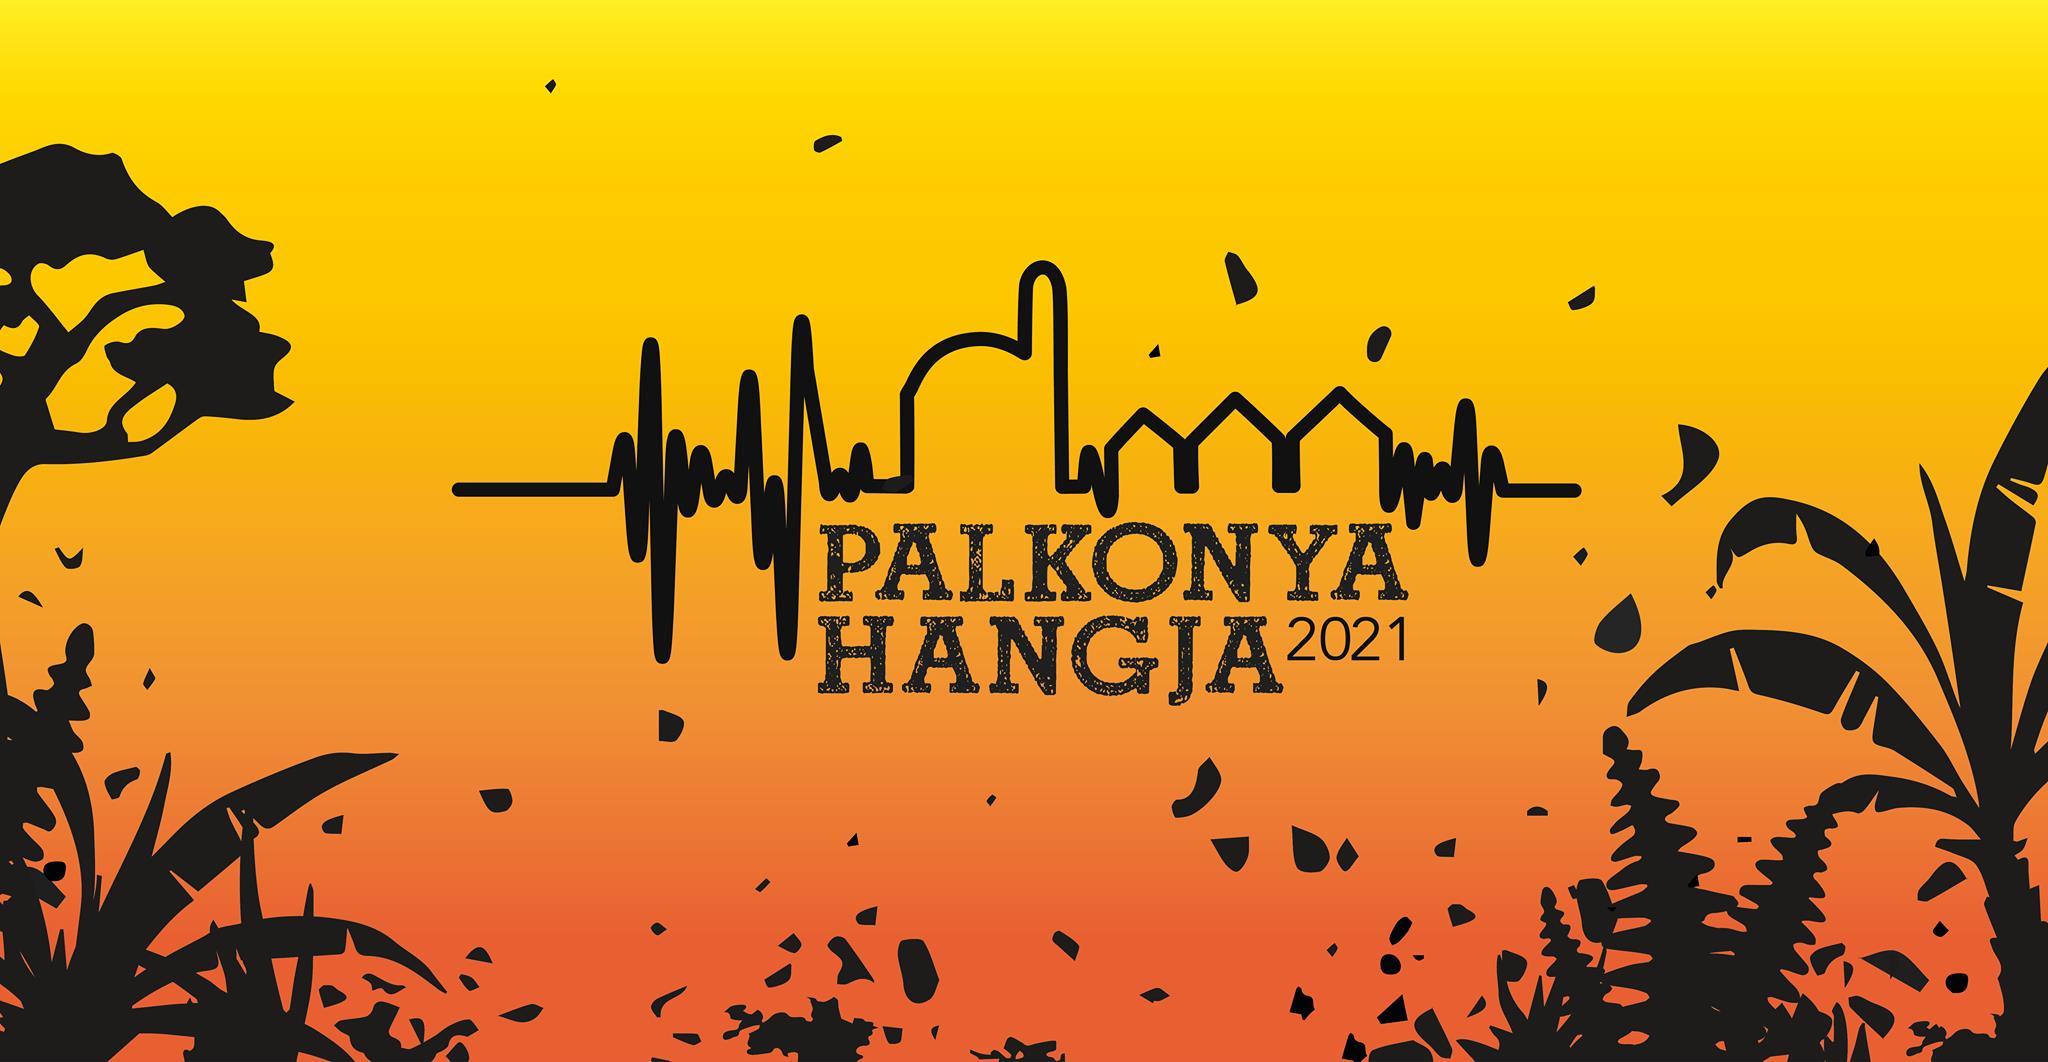 'Palkonya Hangja Festival', Palkonya